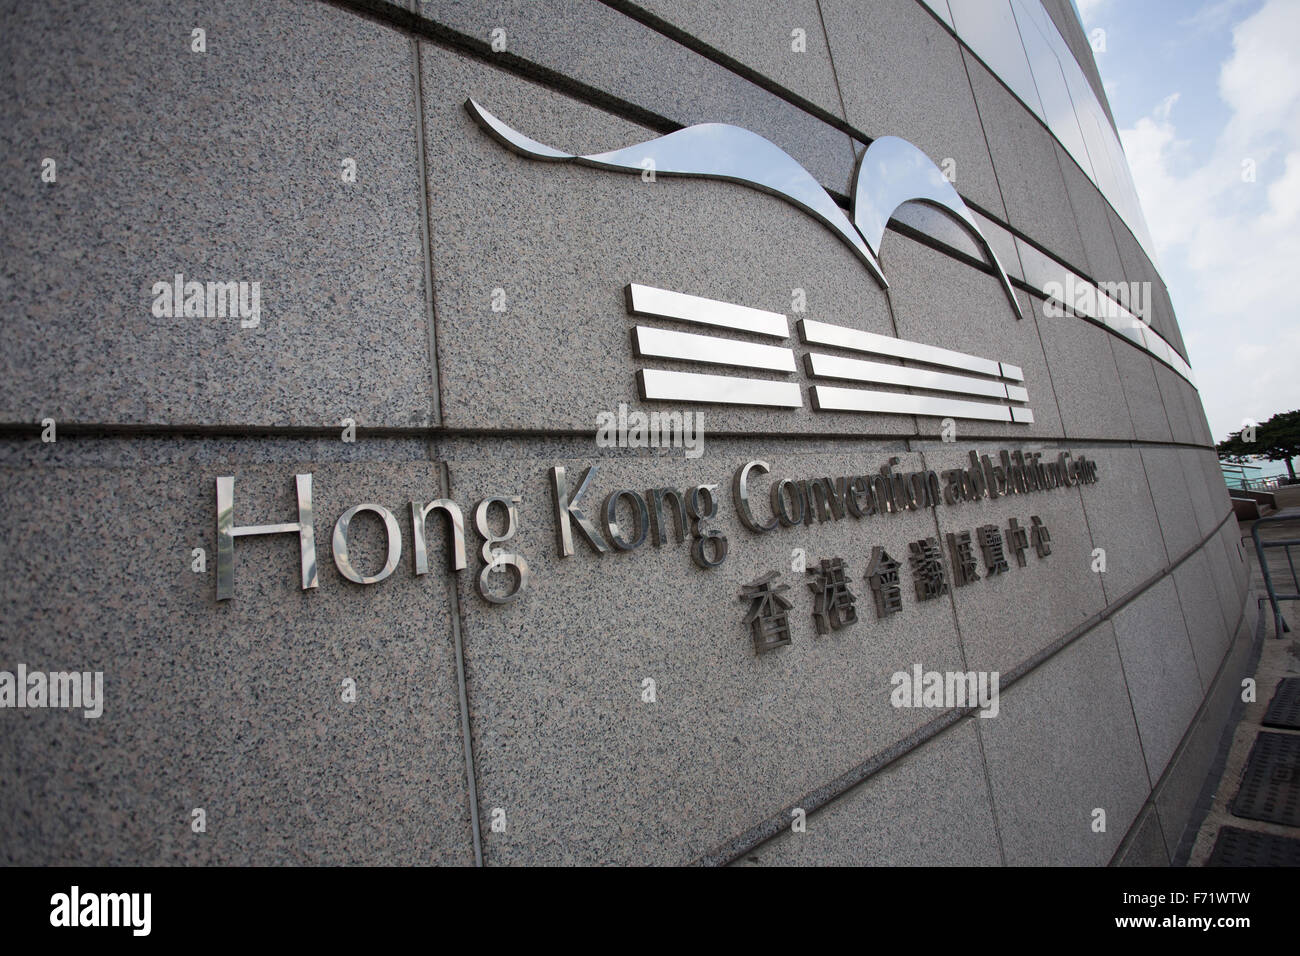 Hong Kong Convention center Banque D'Images